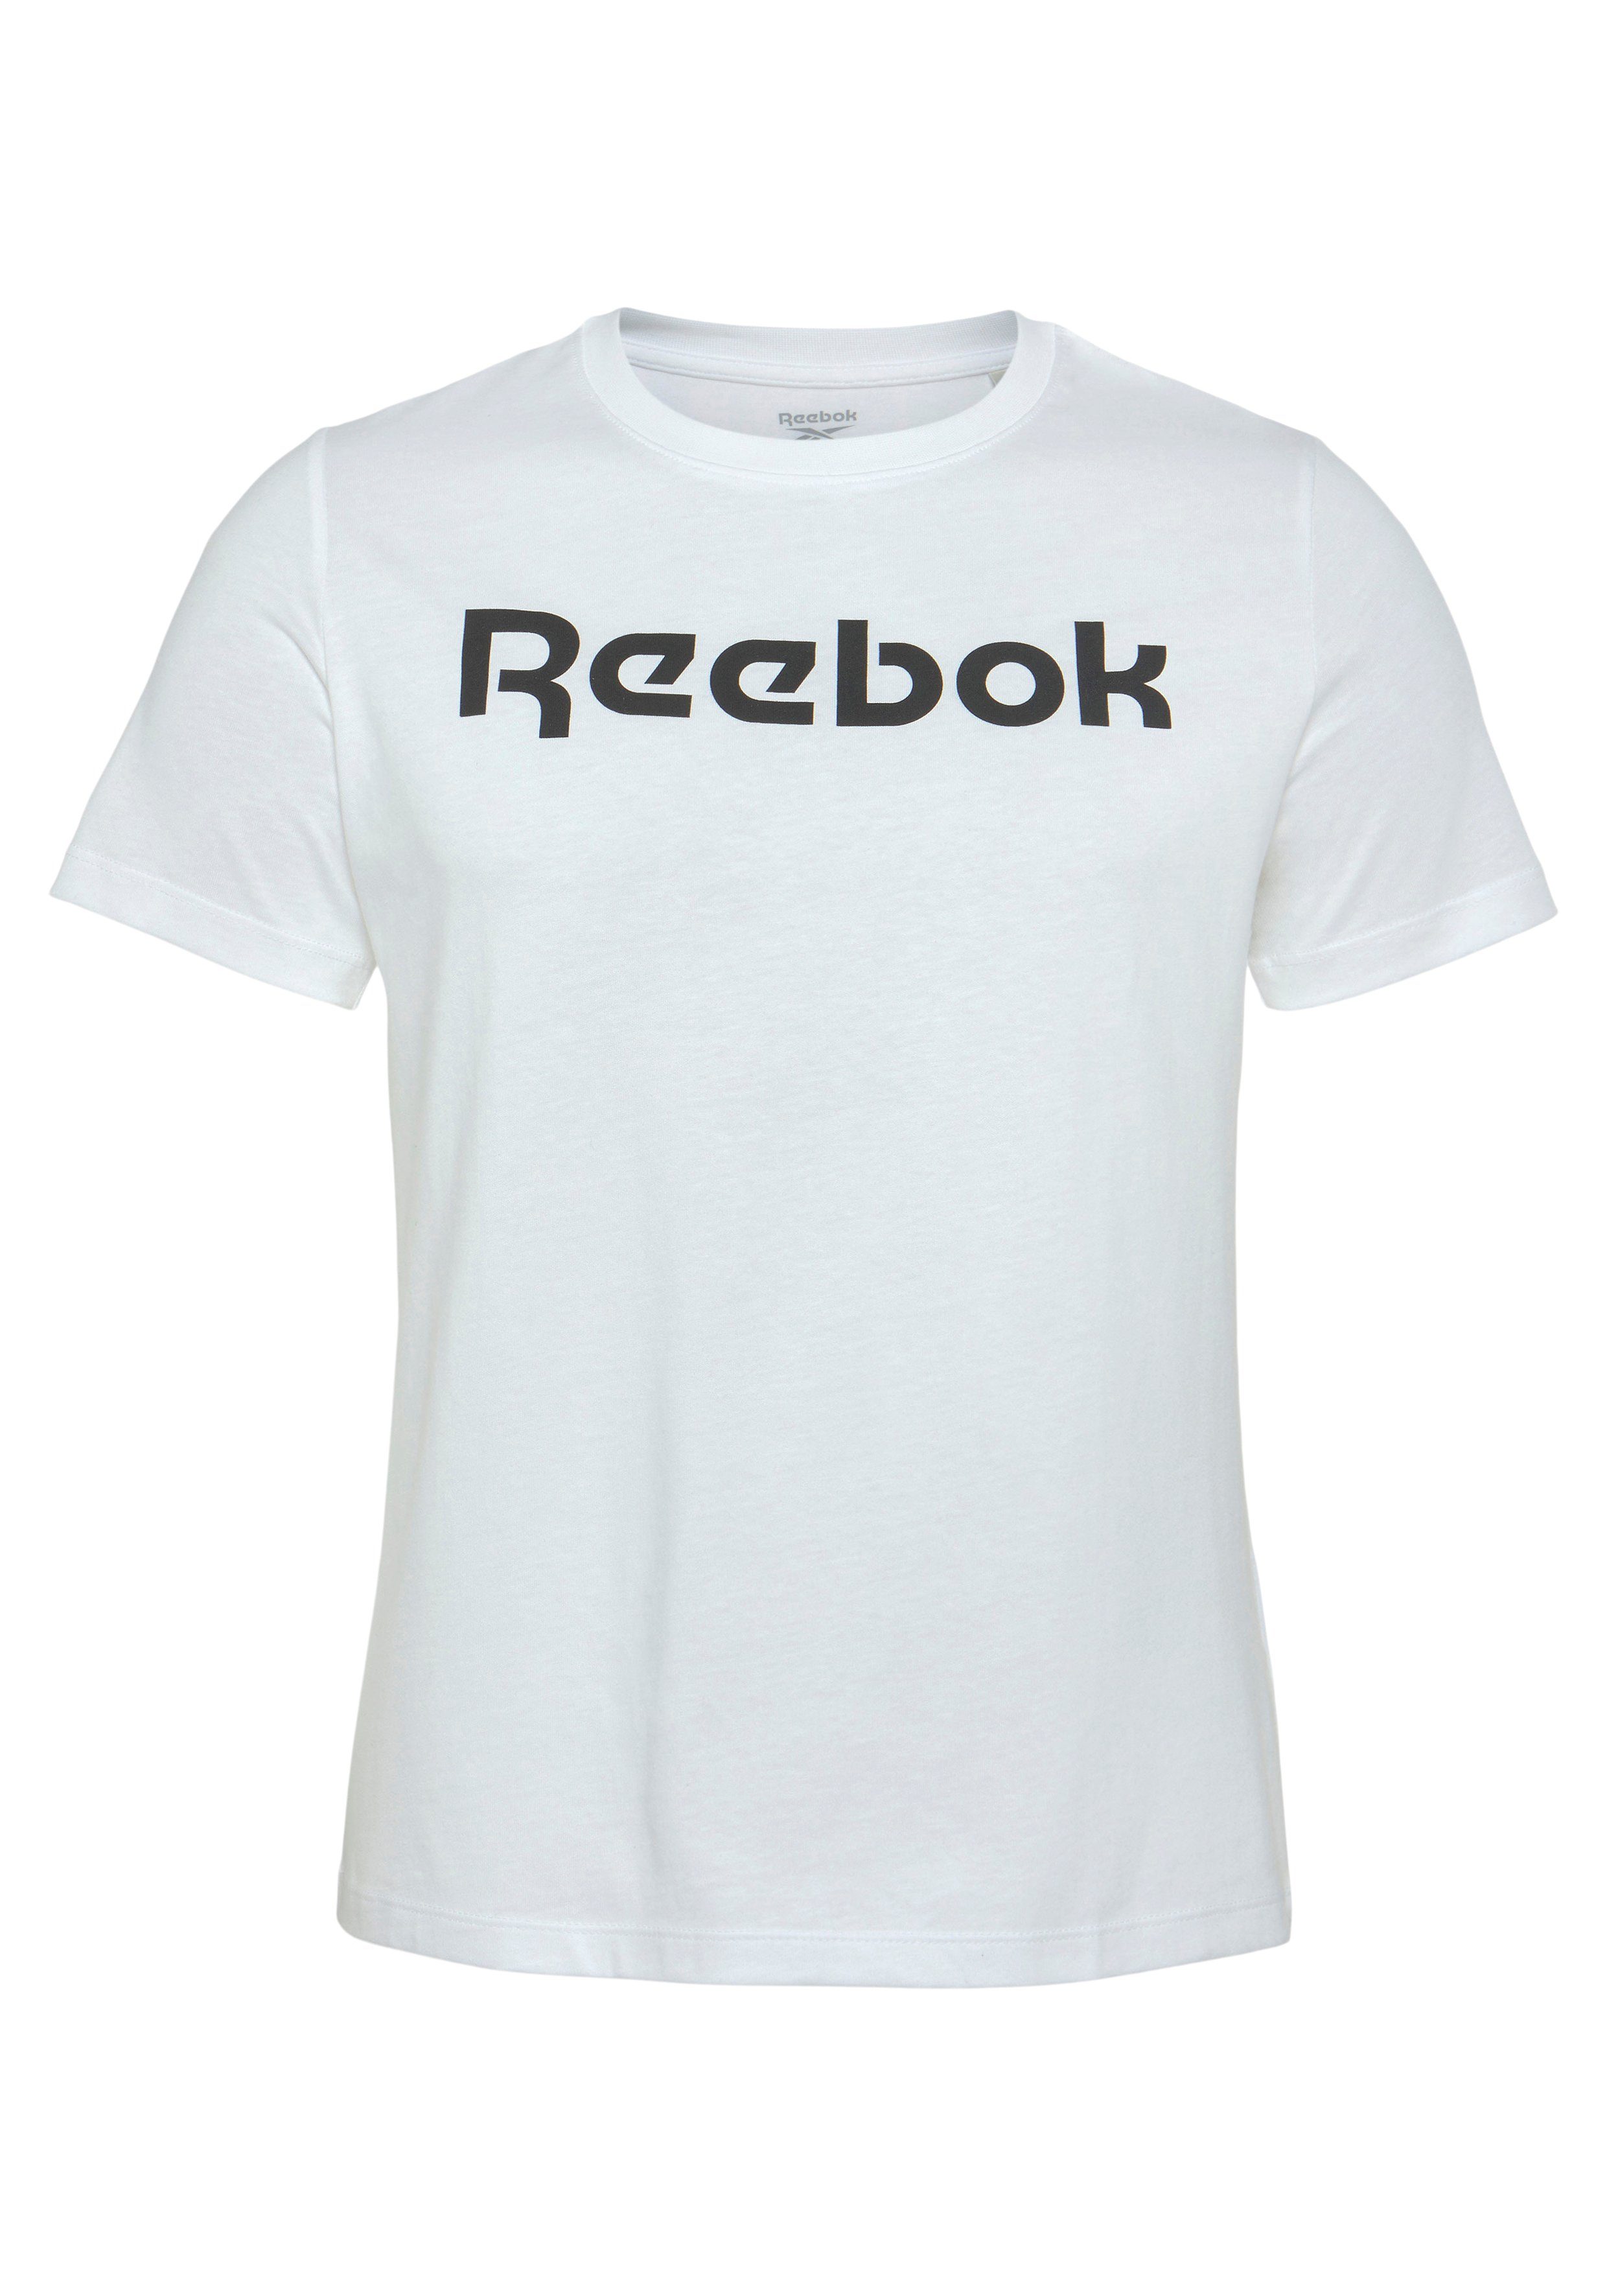 Tee Read Reebok white Reebok Graphic T-Shirt